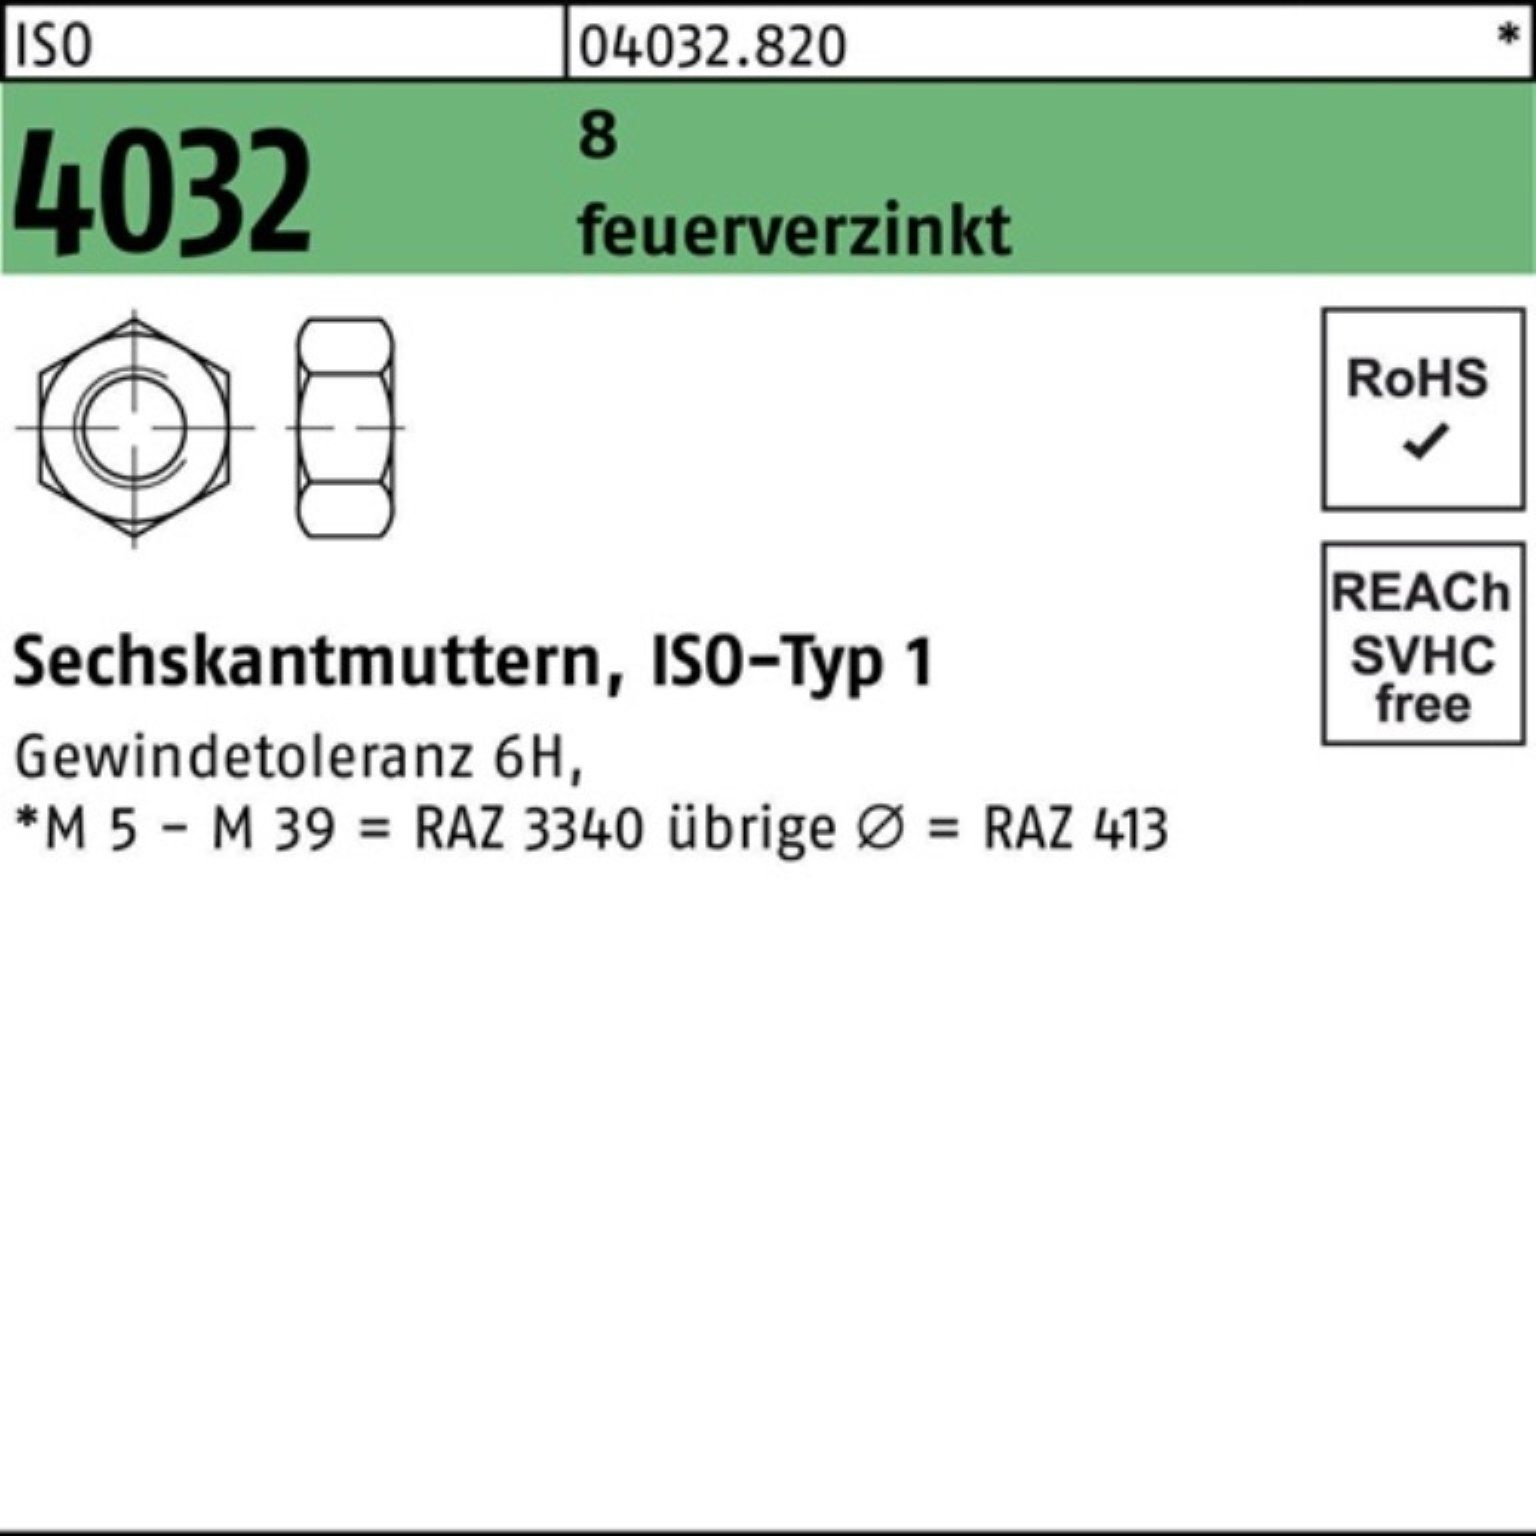 Muttern Sechskantmutter 4032 100er feuerverz. ISO Stück 25 8 ISO Pack Bufab 403 M27